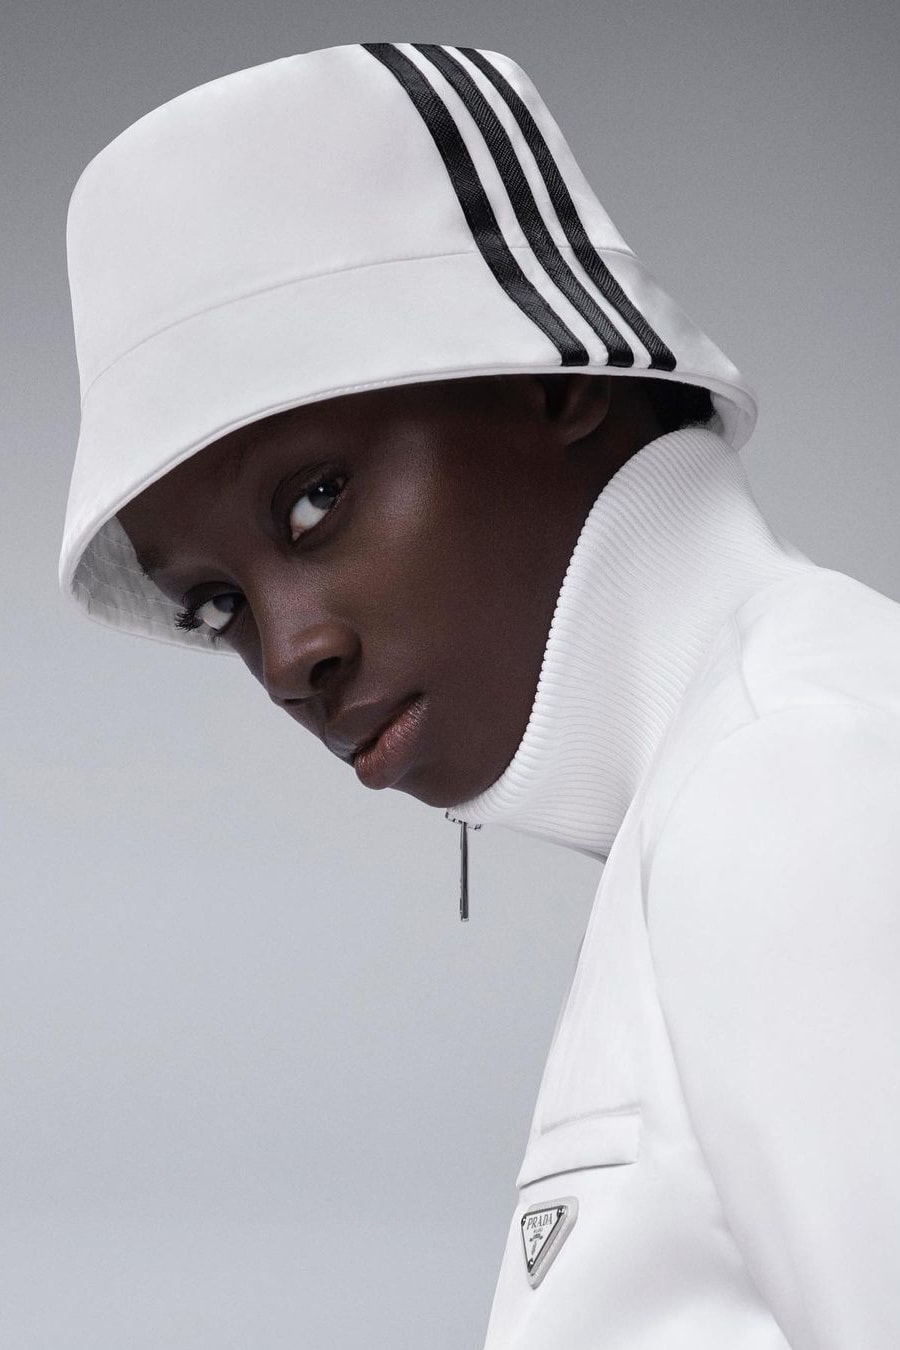 Prada x adidas Originals Apparel Launch Information Track Suit Shellsuit Re Nylon Bucket Hat Editorial Lookbook Release Information